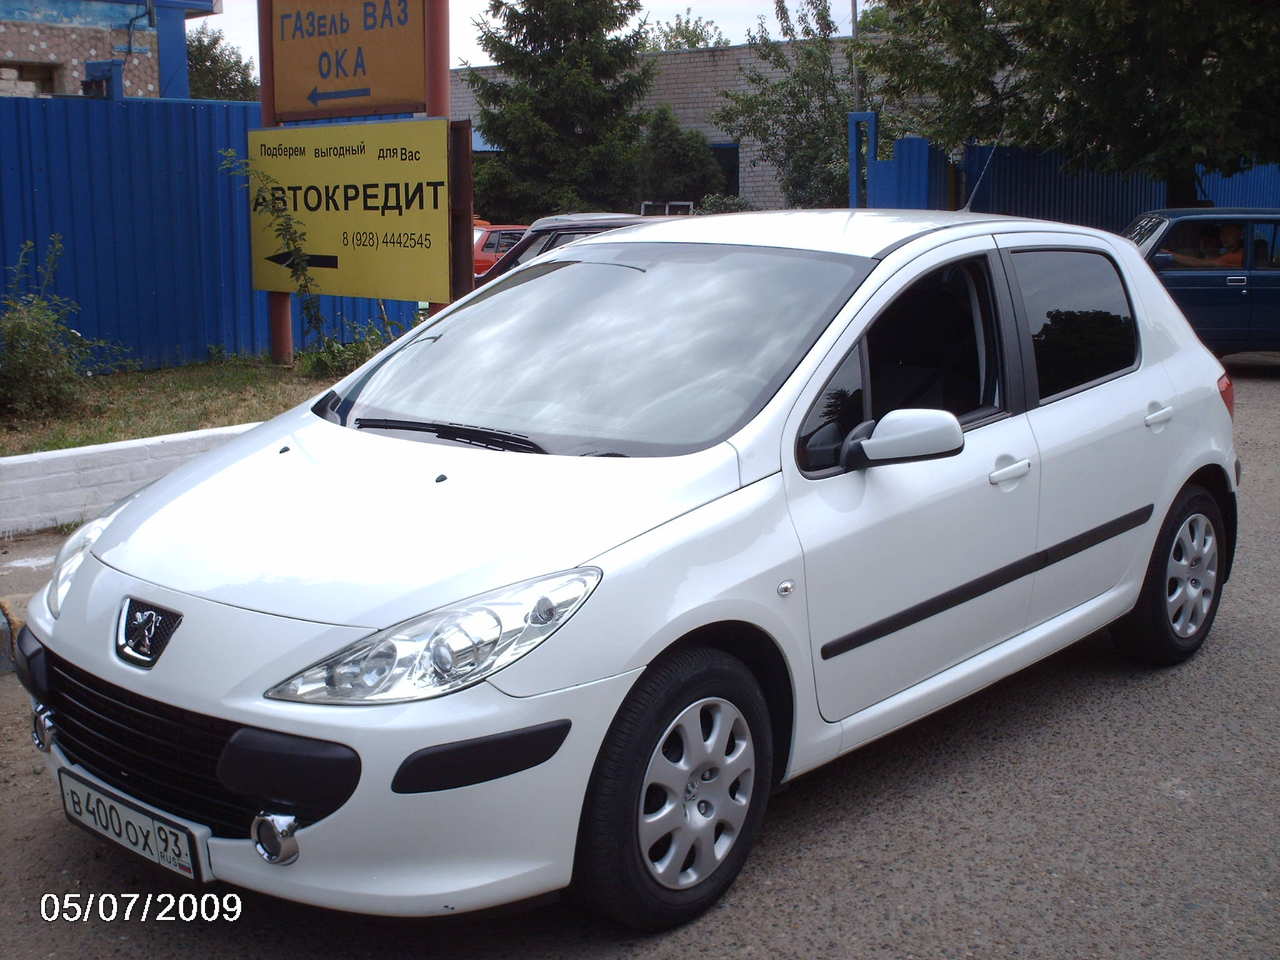 2007 Peugeot 307 specs